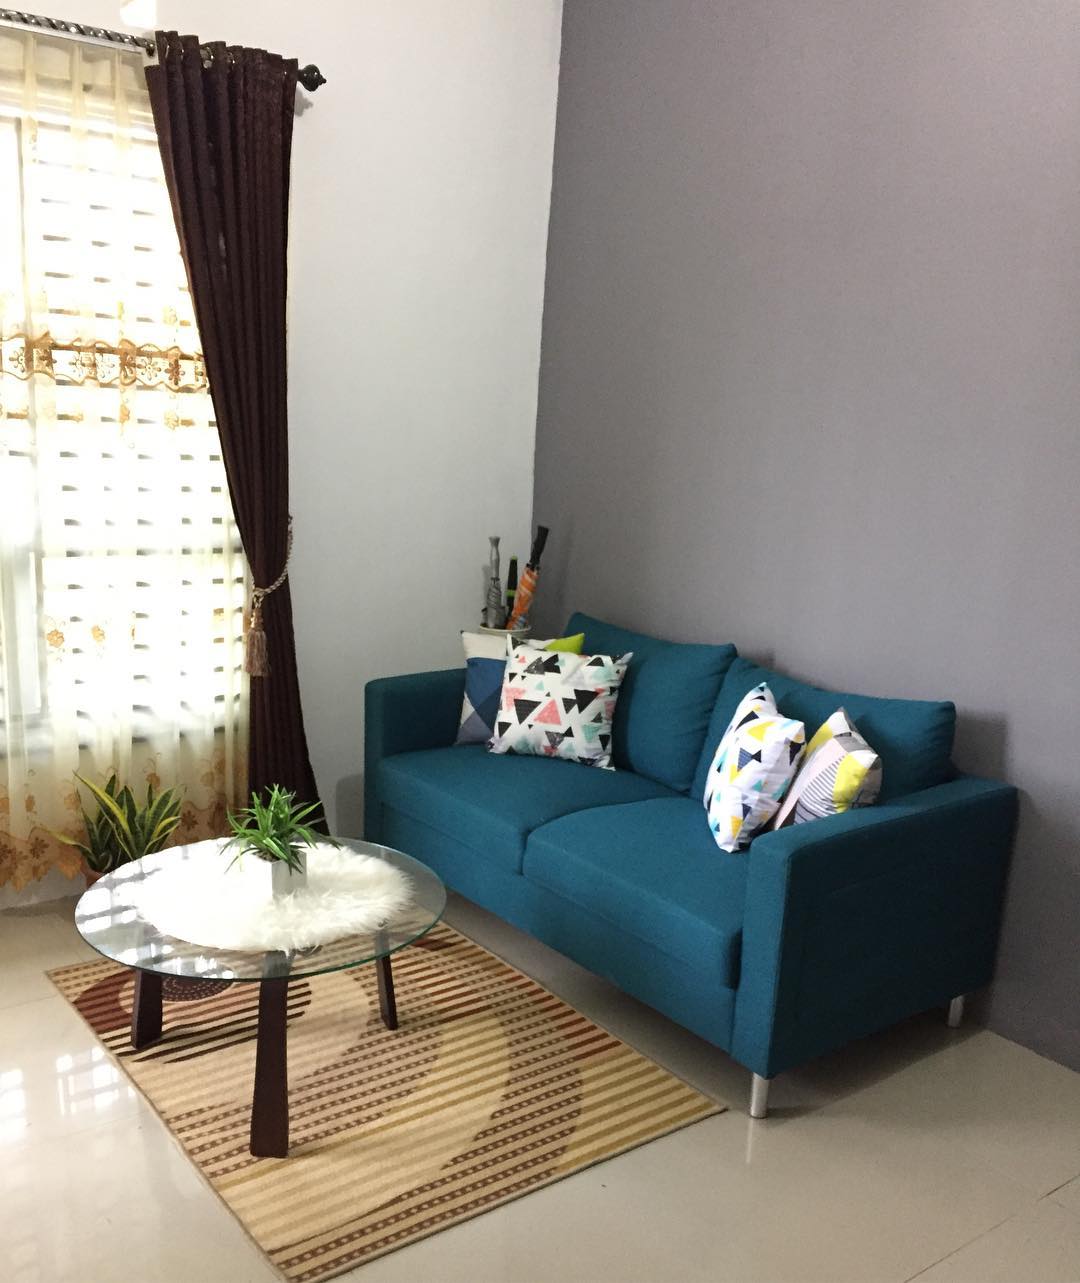 Ide Cara Dekorasi Rumah Tipe 36 72 Homeshabbycom Kumpulan